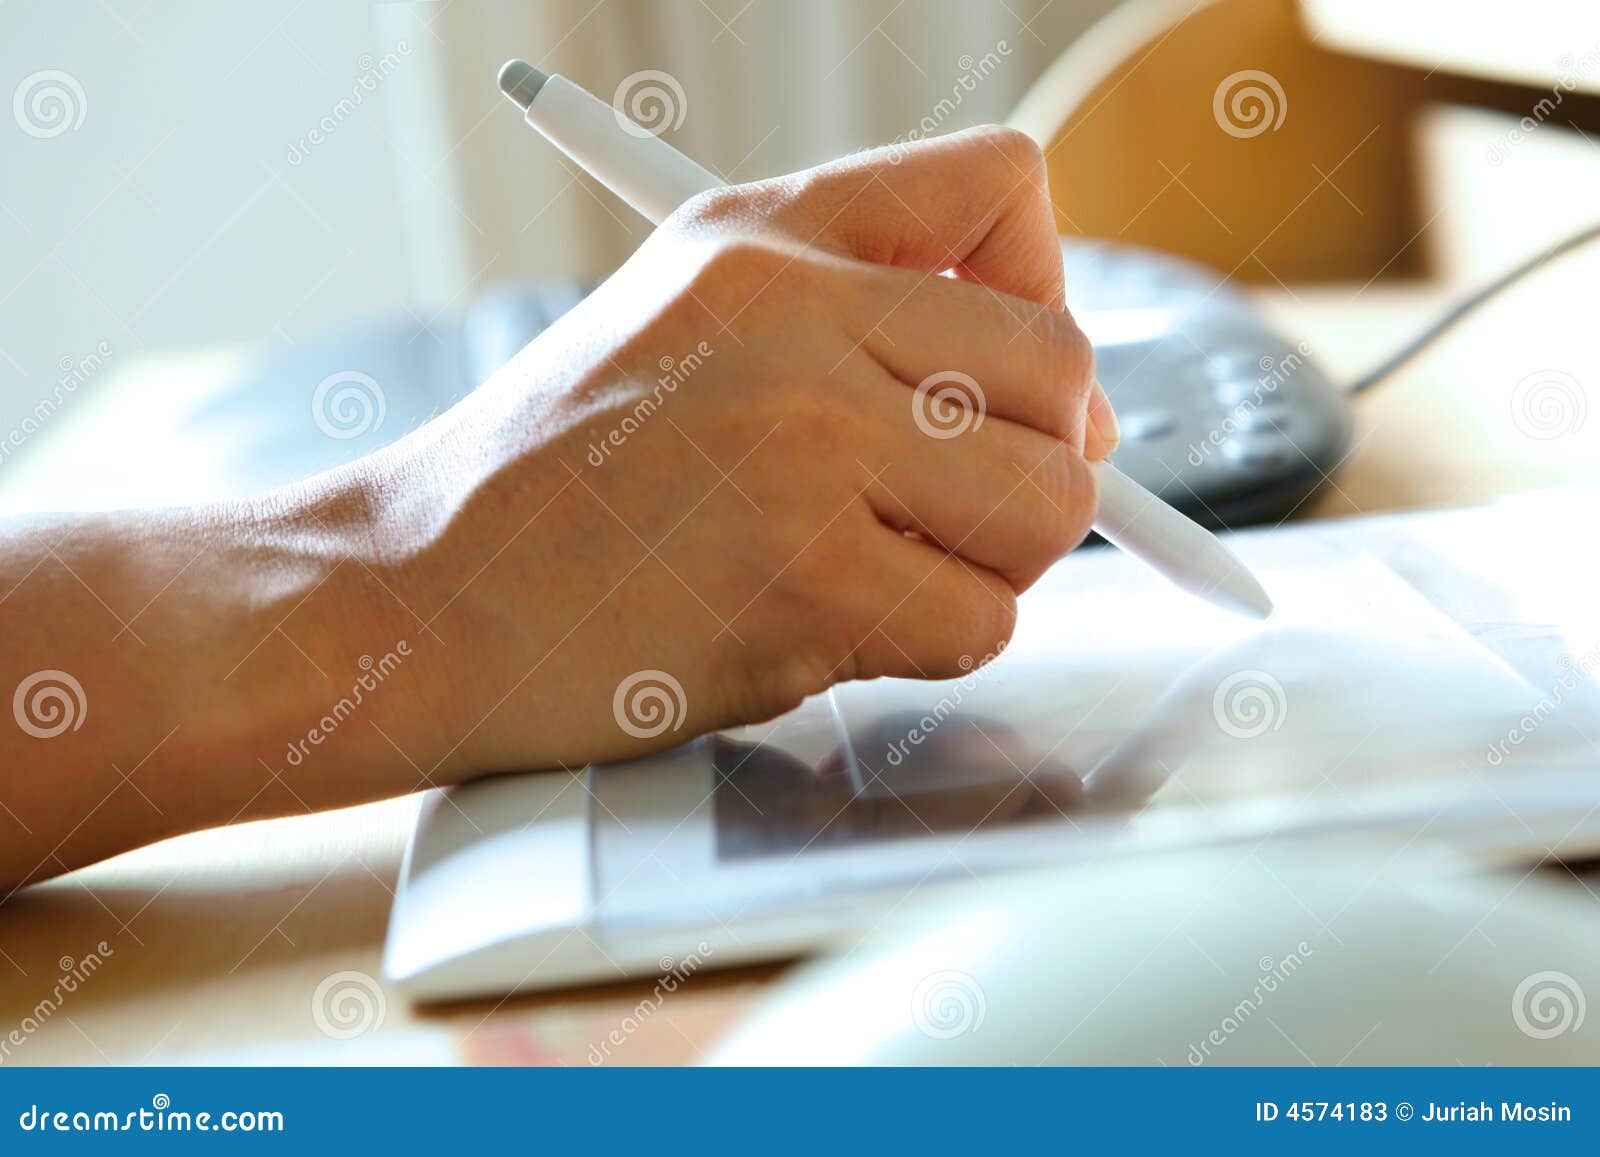 hand holding stylus pen